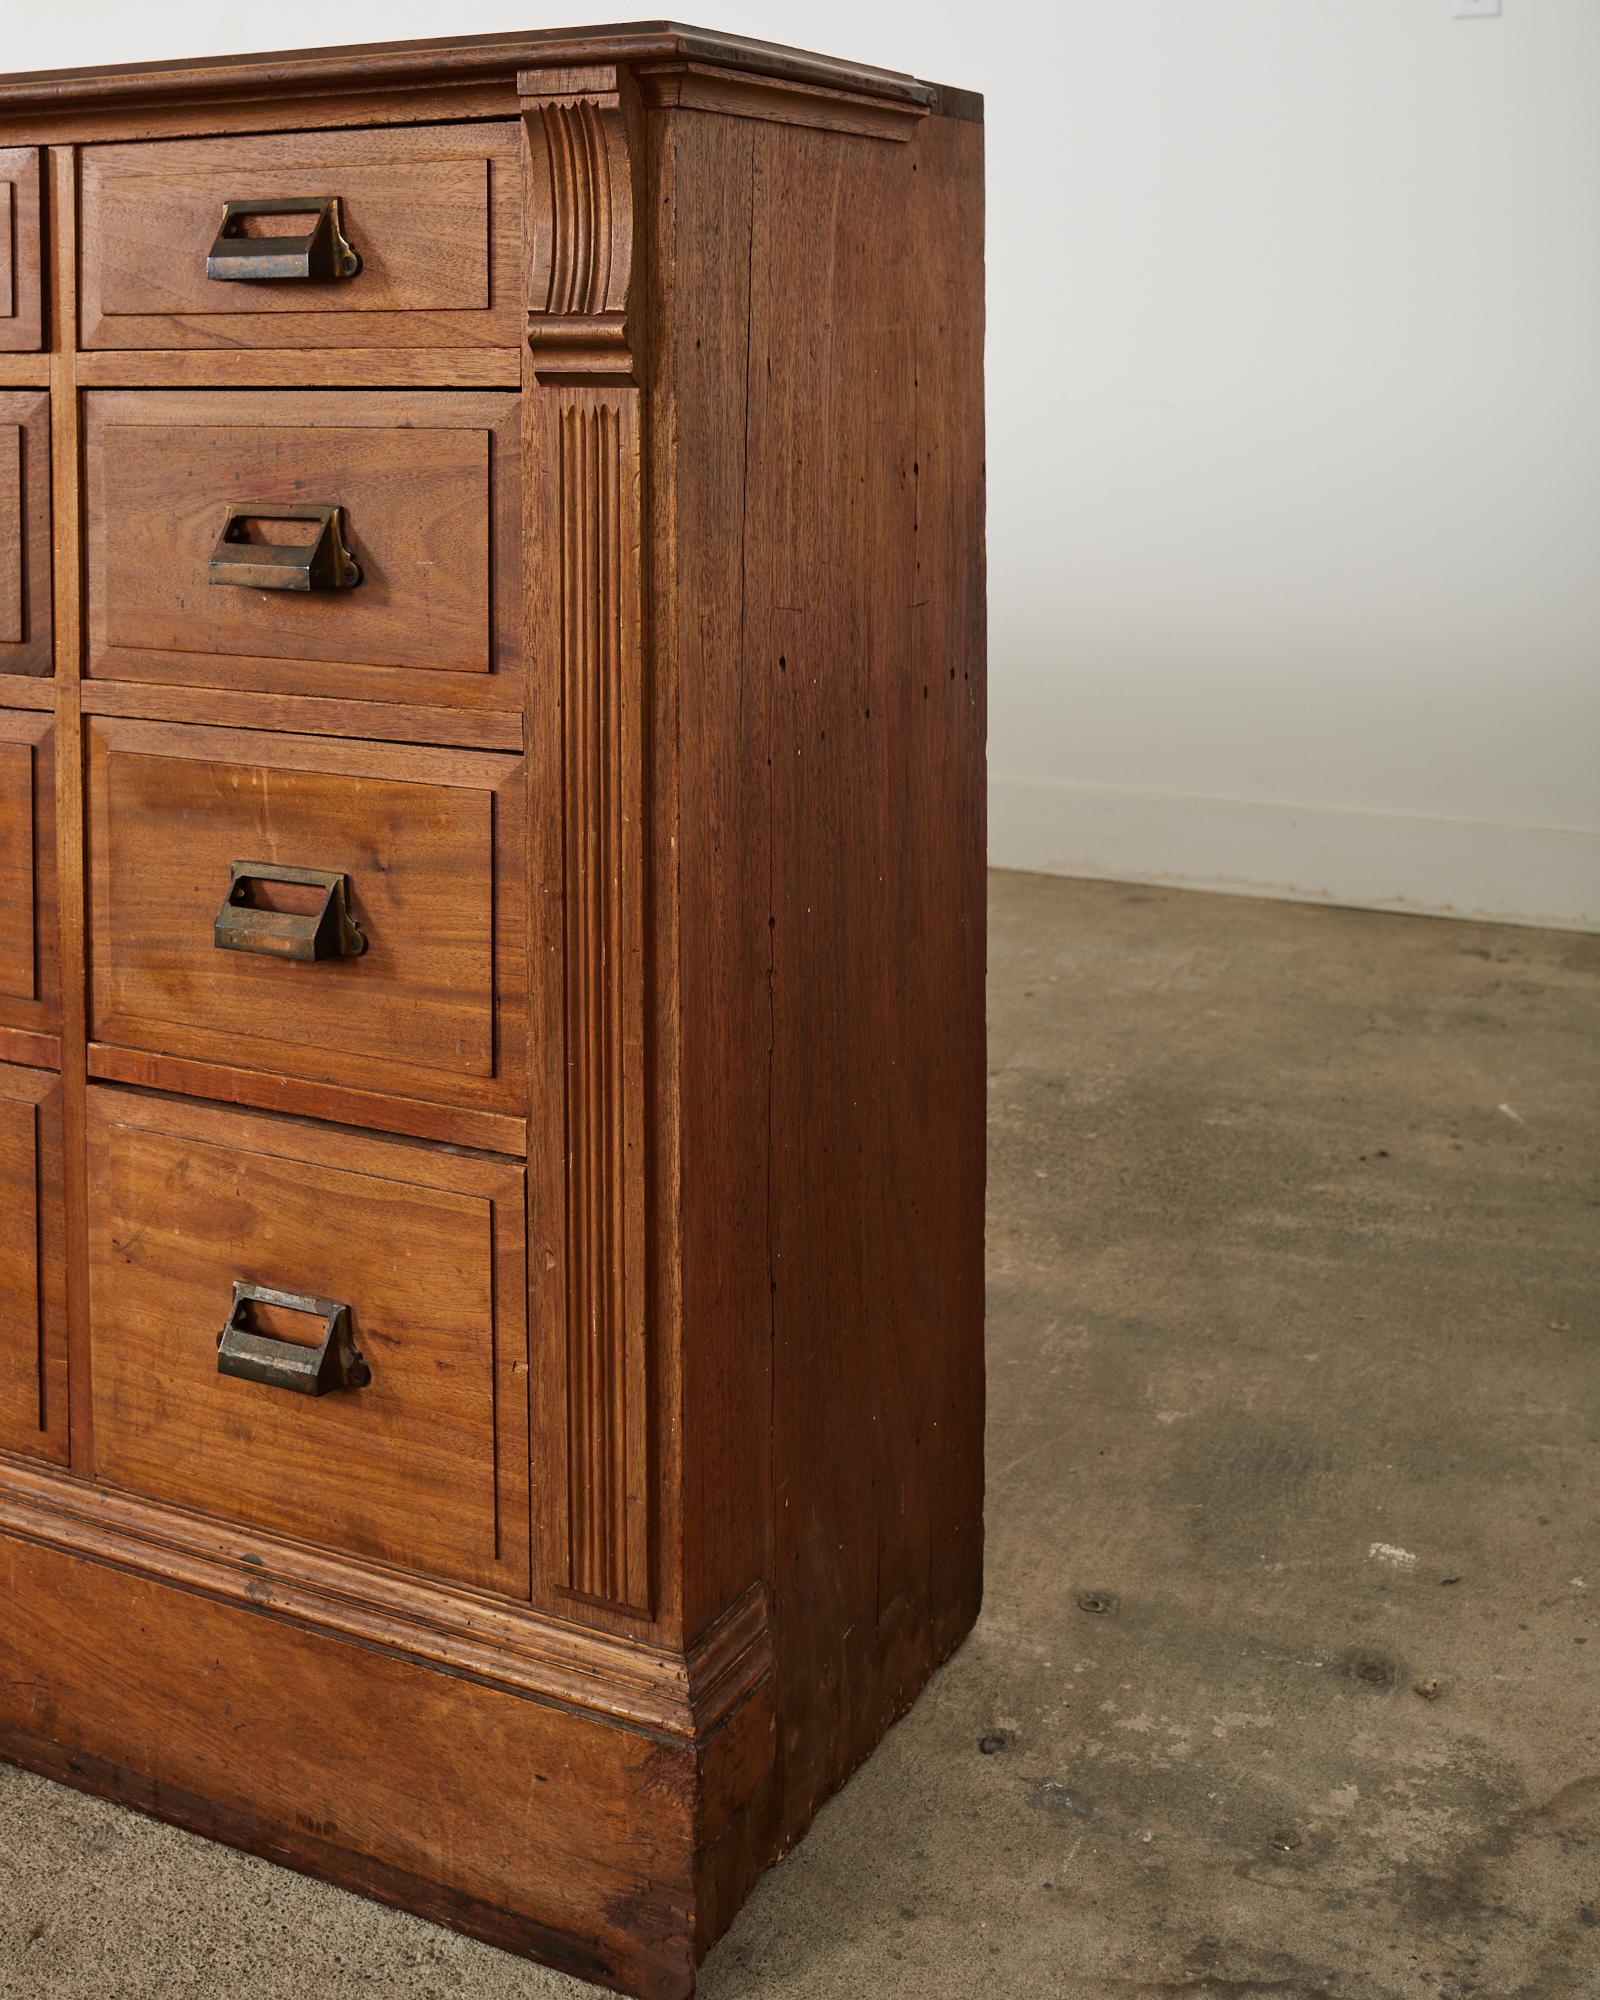 19th Century English Millinery Haberdashery Hardwood Apothecary Cabinet  For Sale 8